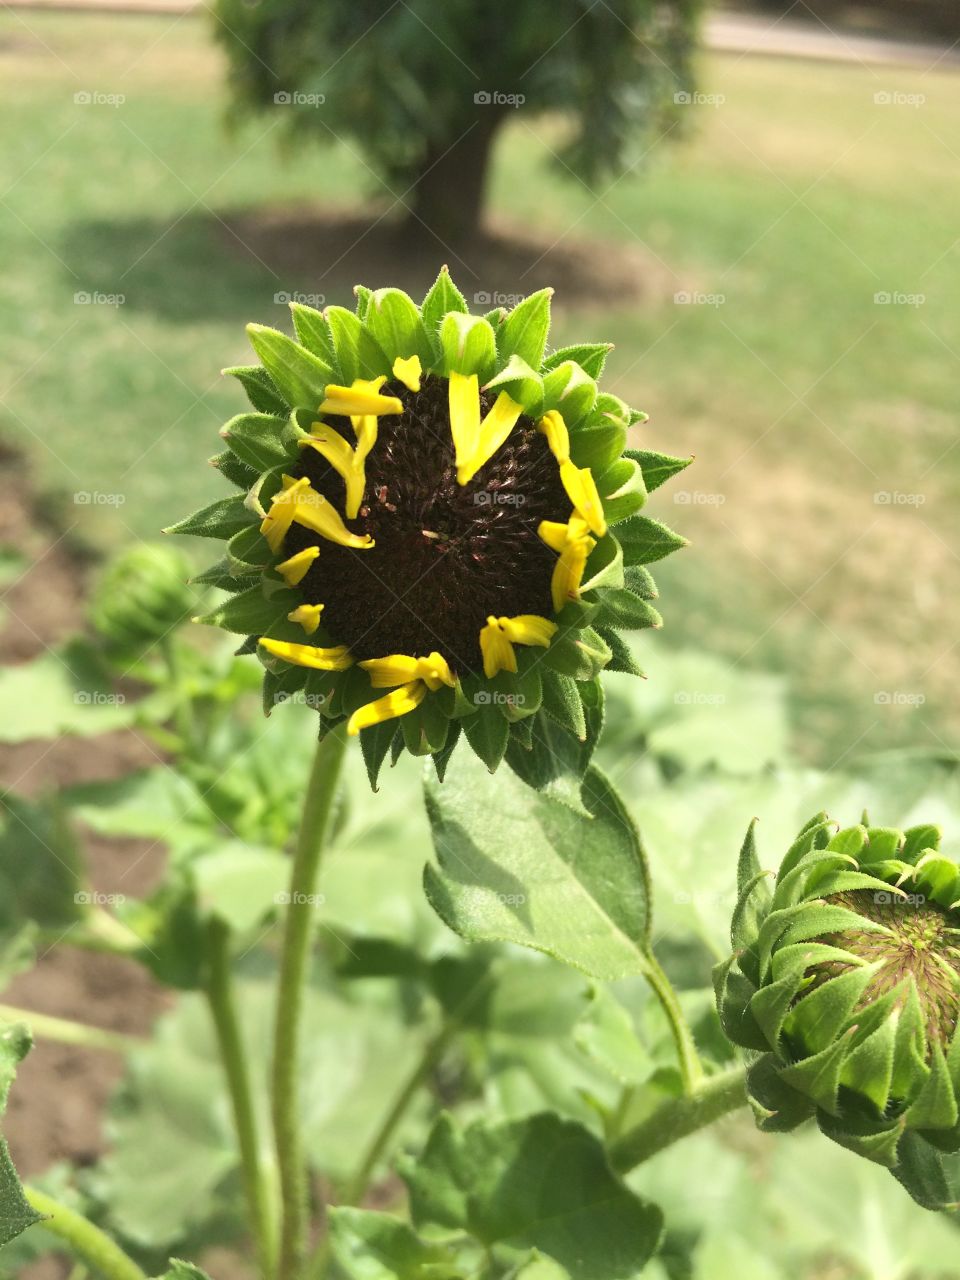 #flower #sunflower